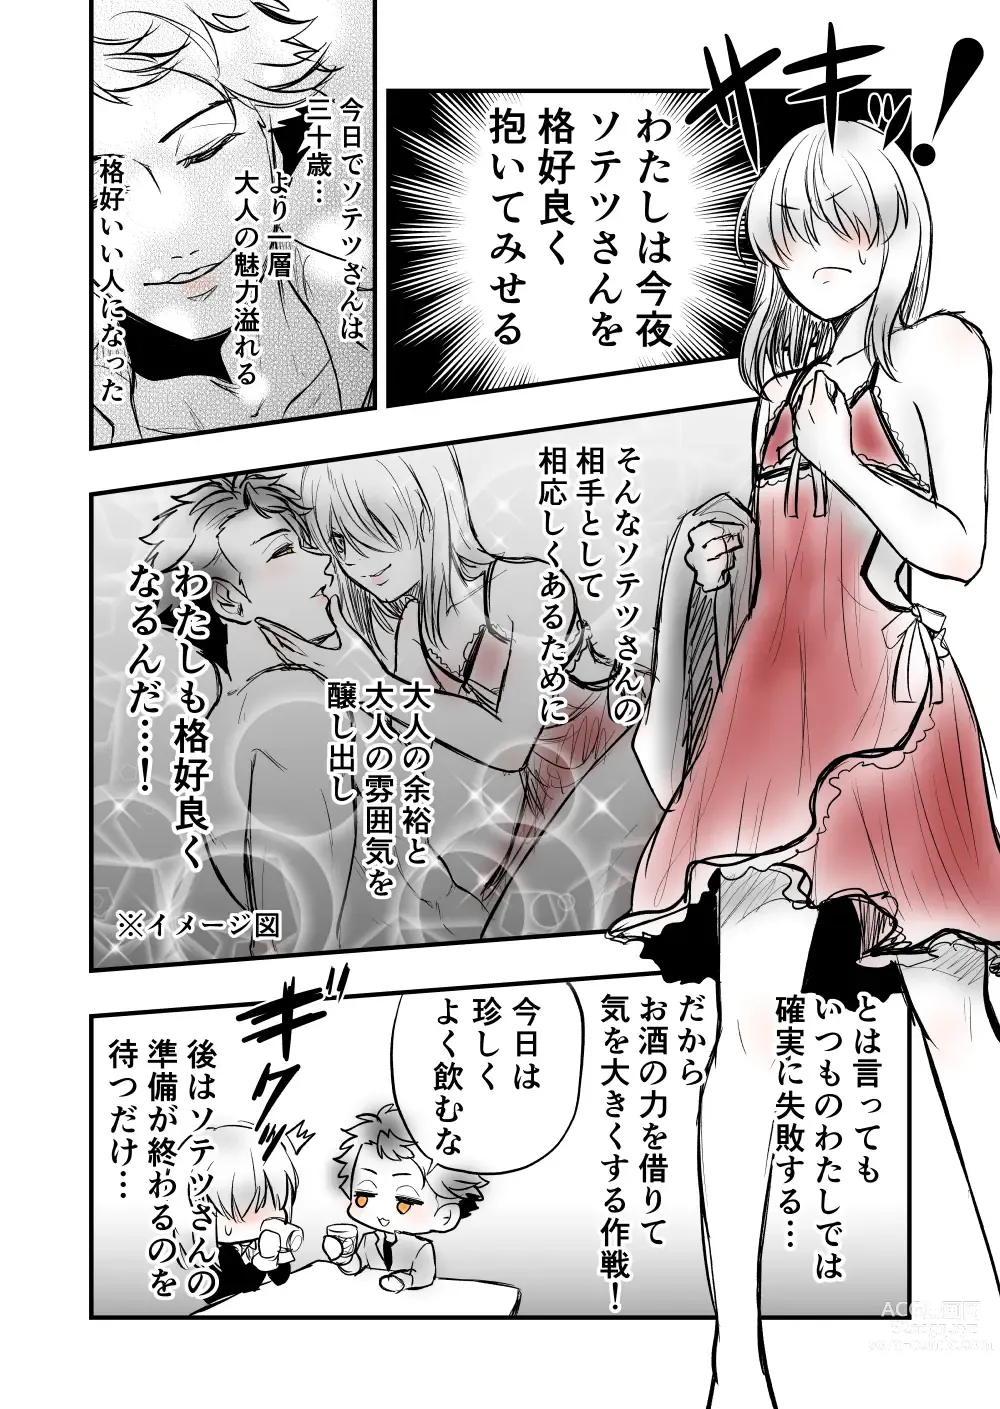 Page 5 of doujinshi 6